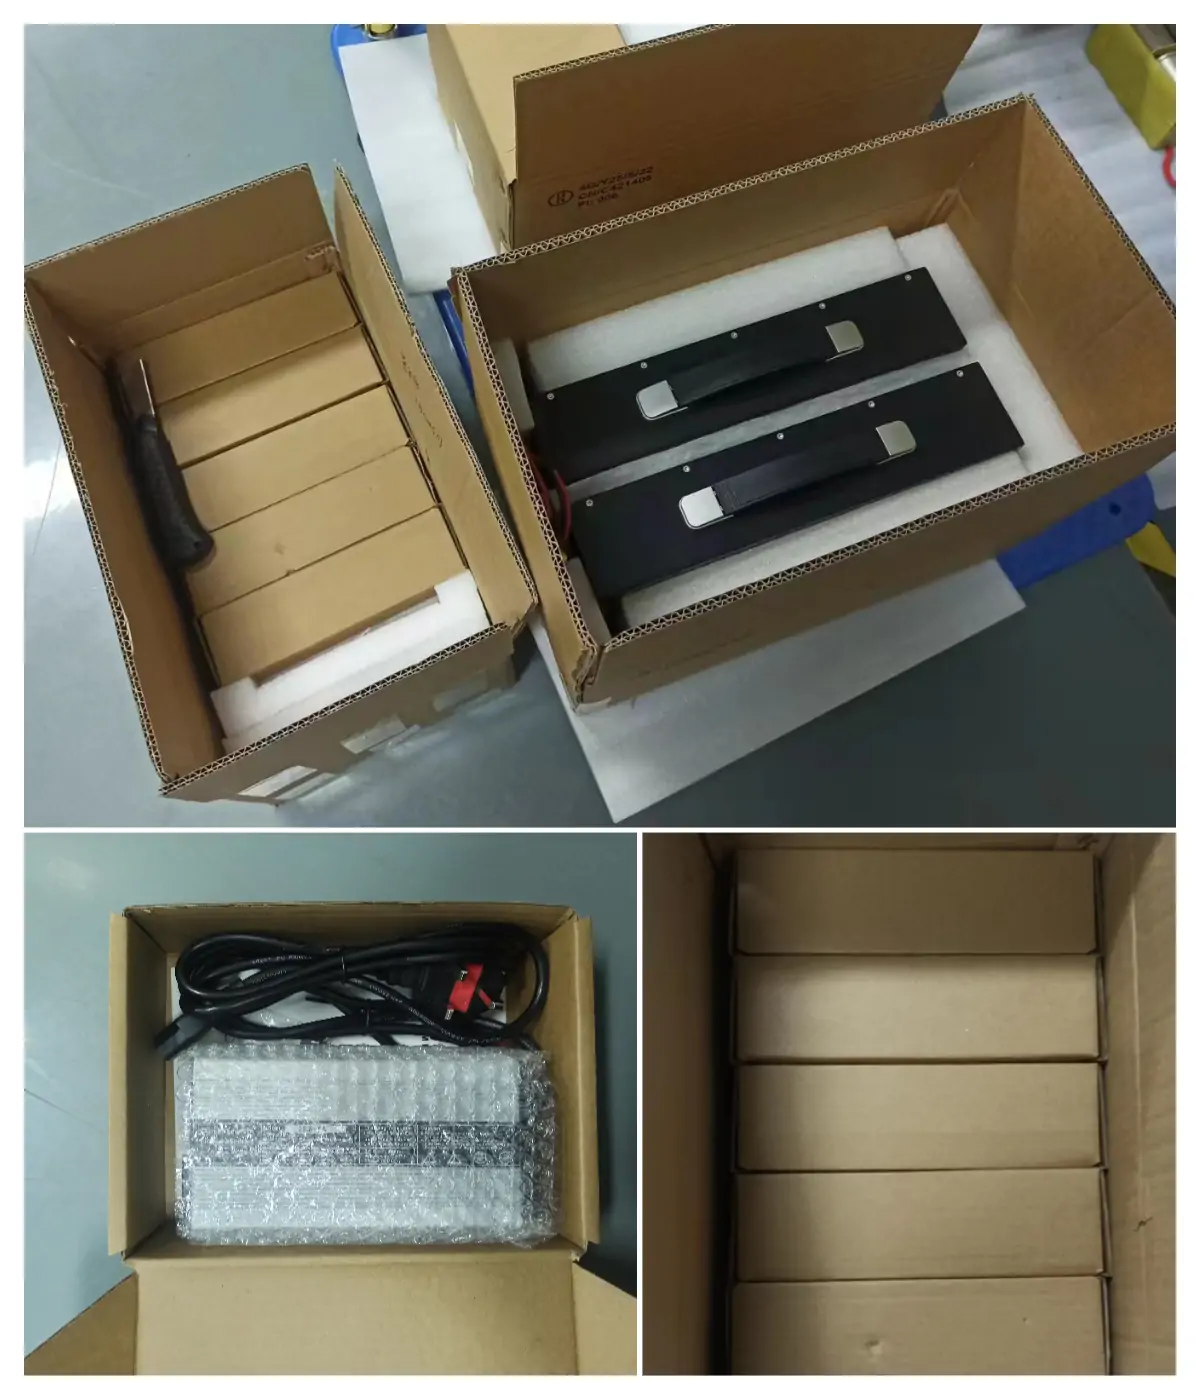 packing details of 25.6V 36Ah lifepo4 battery pack